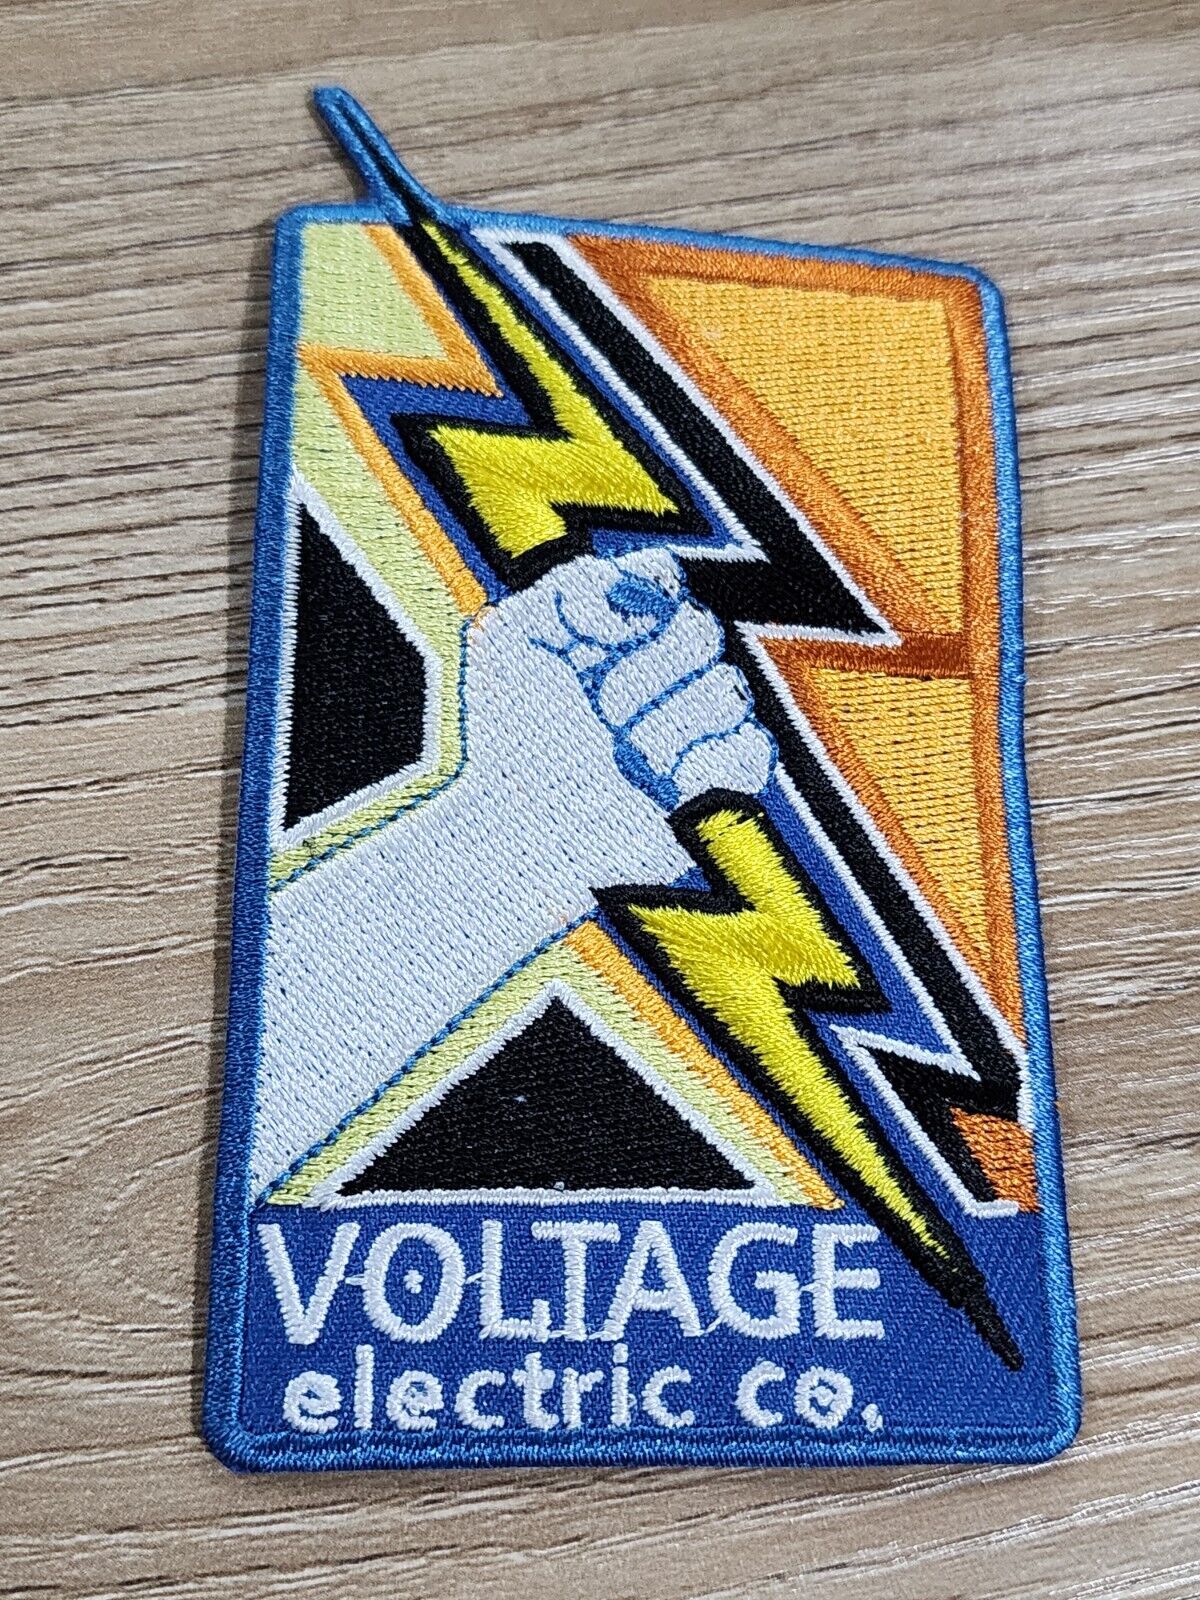 Voltage Electric Company Novelty Patch